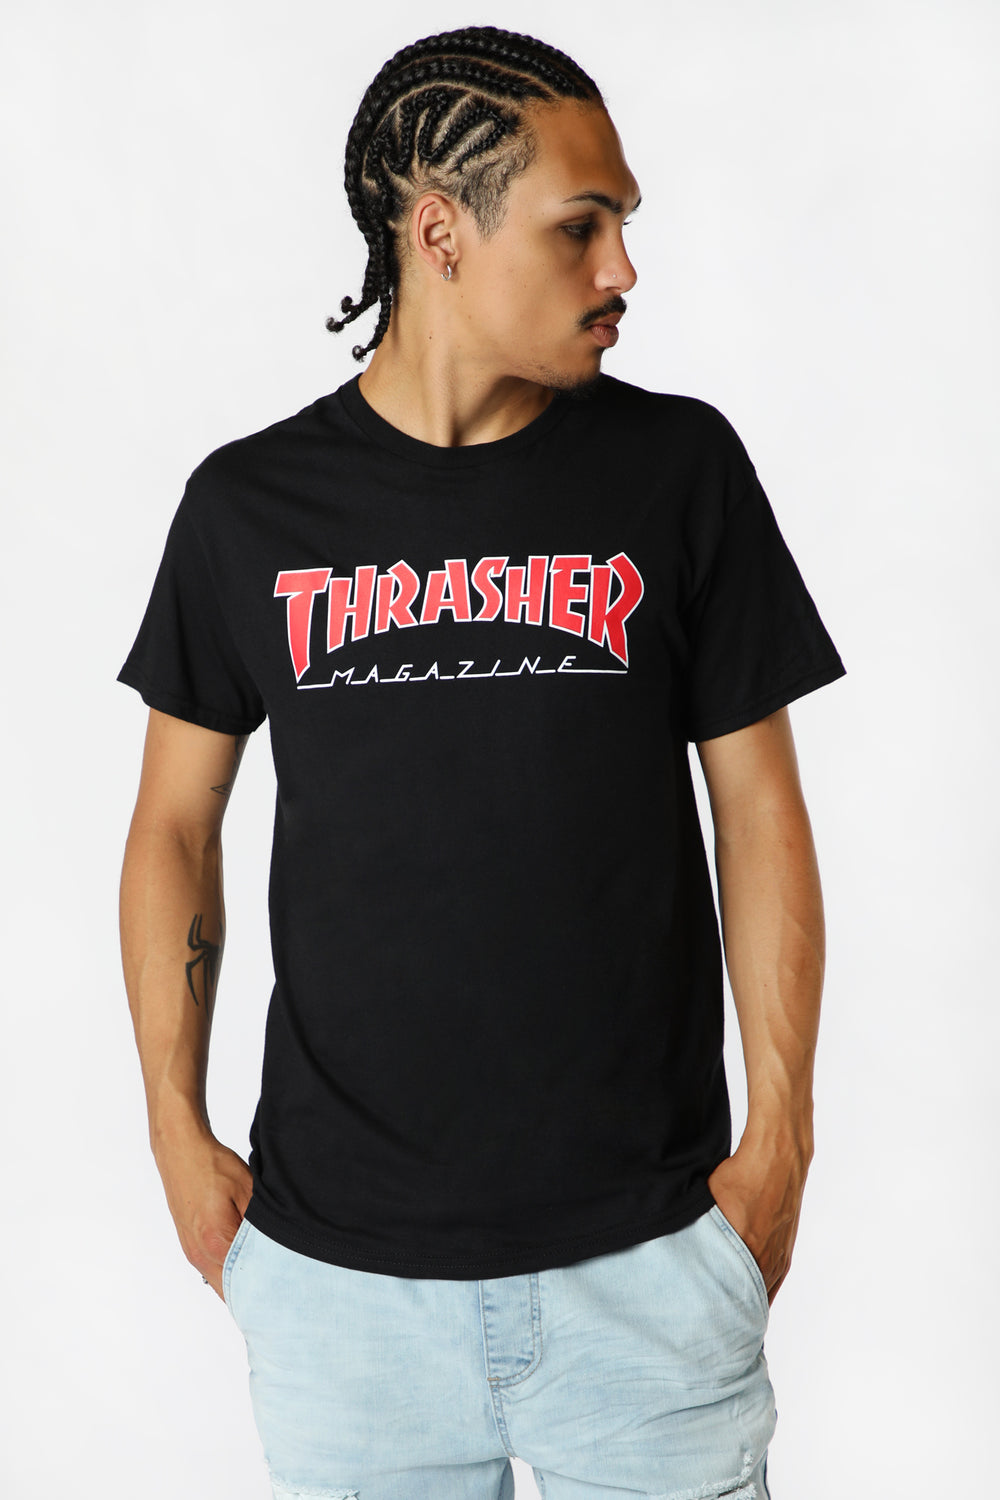 Thrasher Magazine Black T-Shirt Black